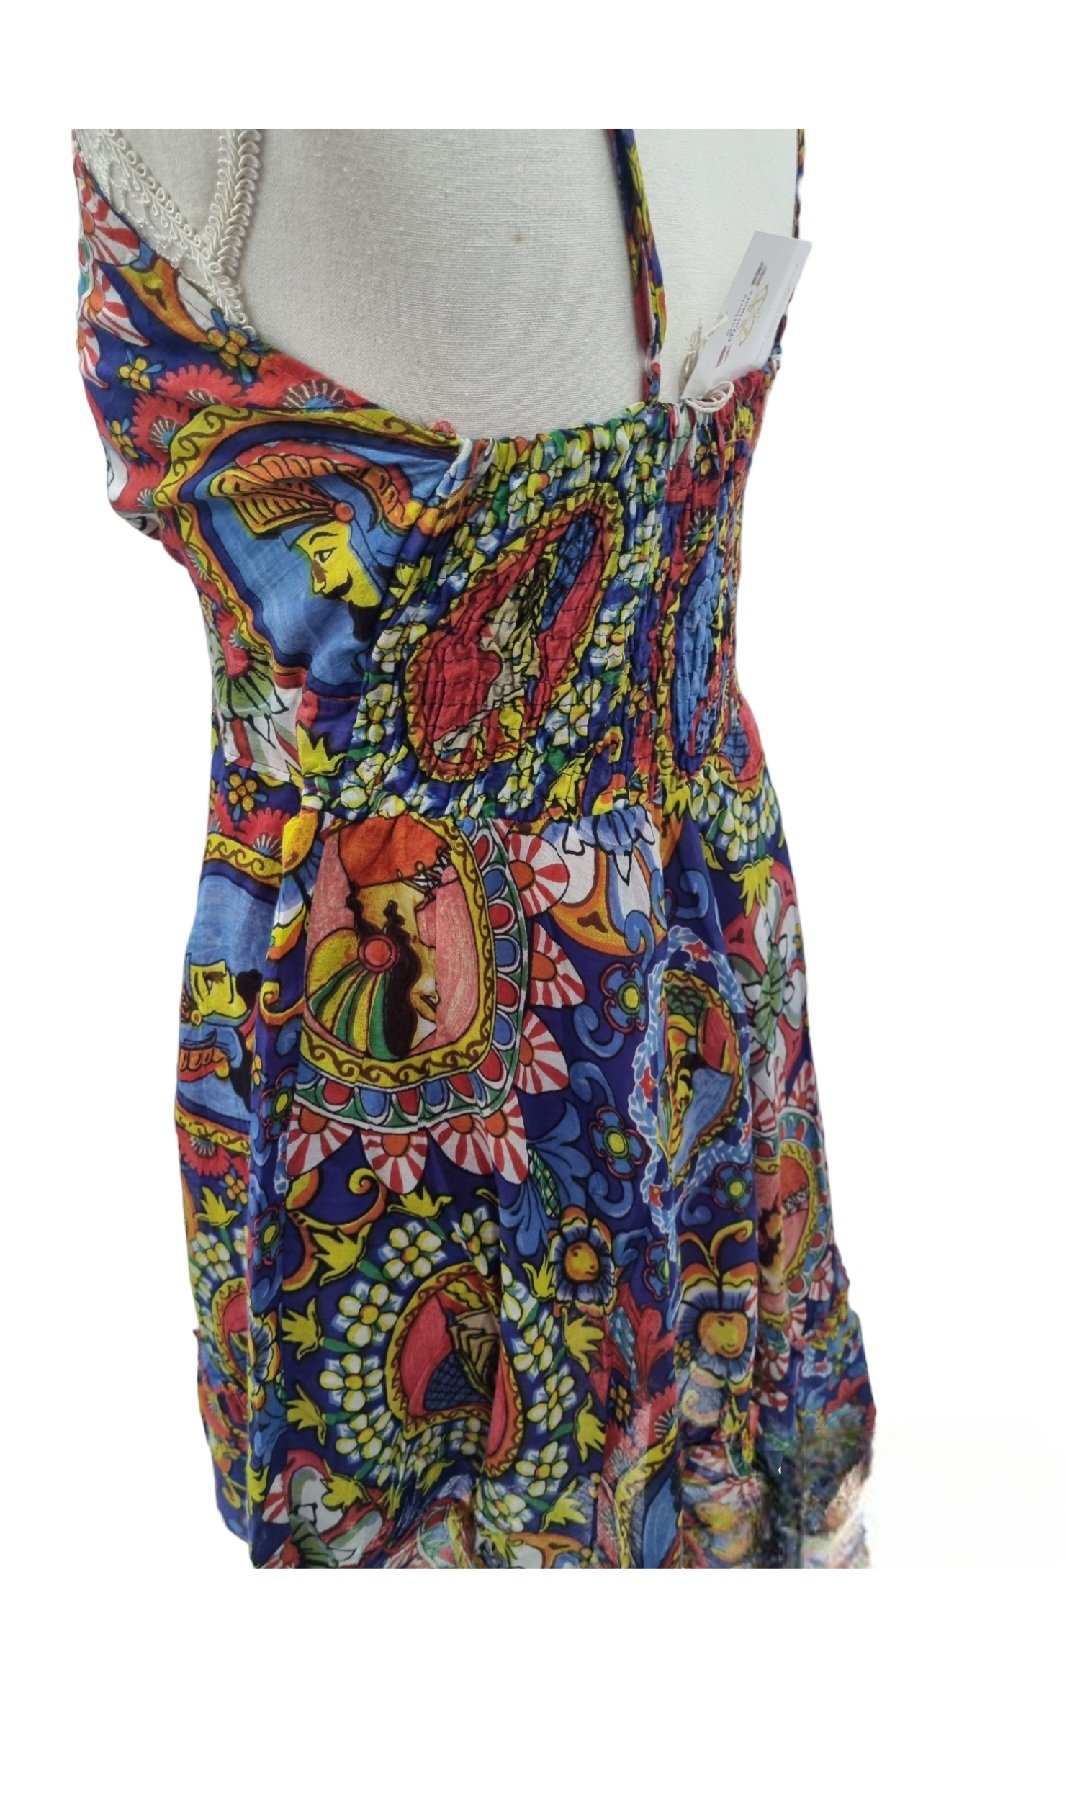 Short dress 100% cotton with adjustable straps, elasticated back. One size Pupi pattern